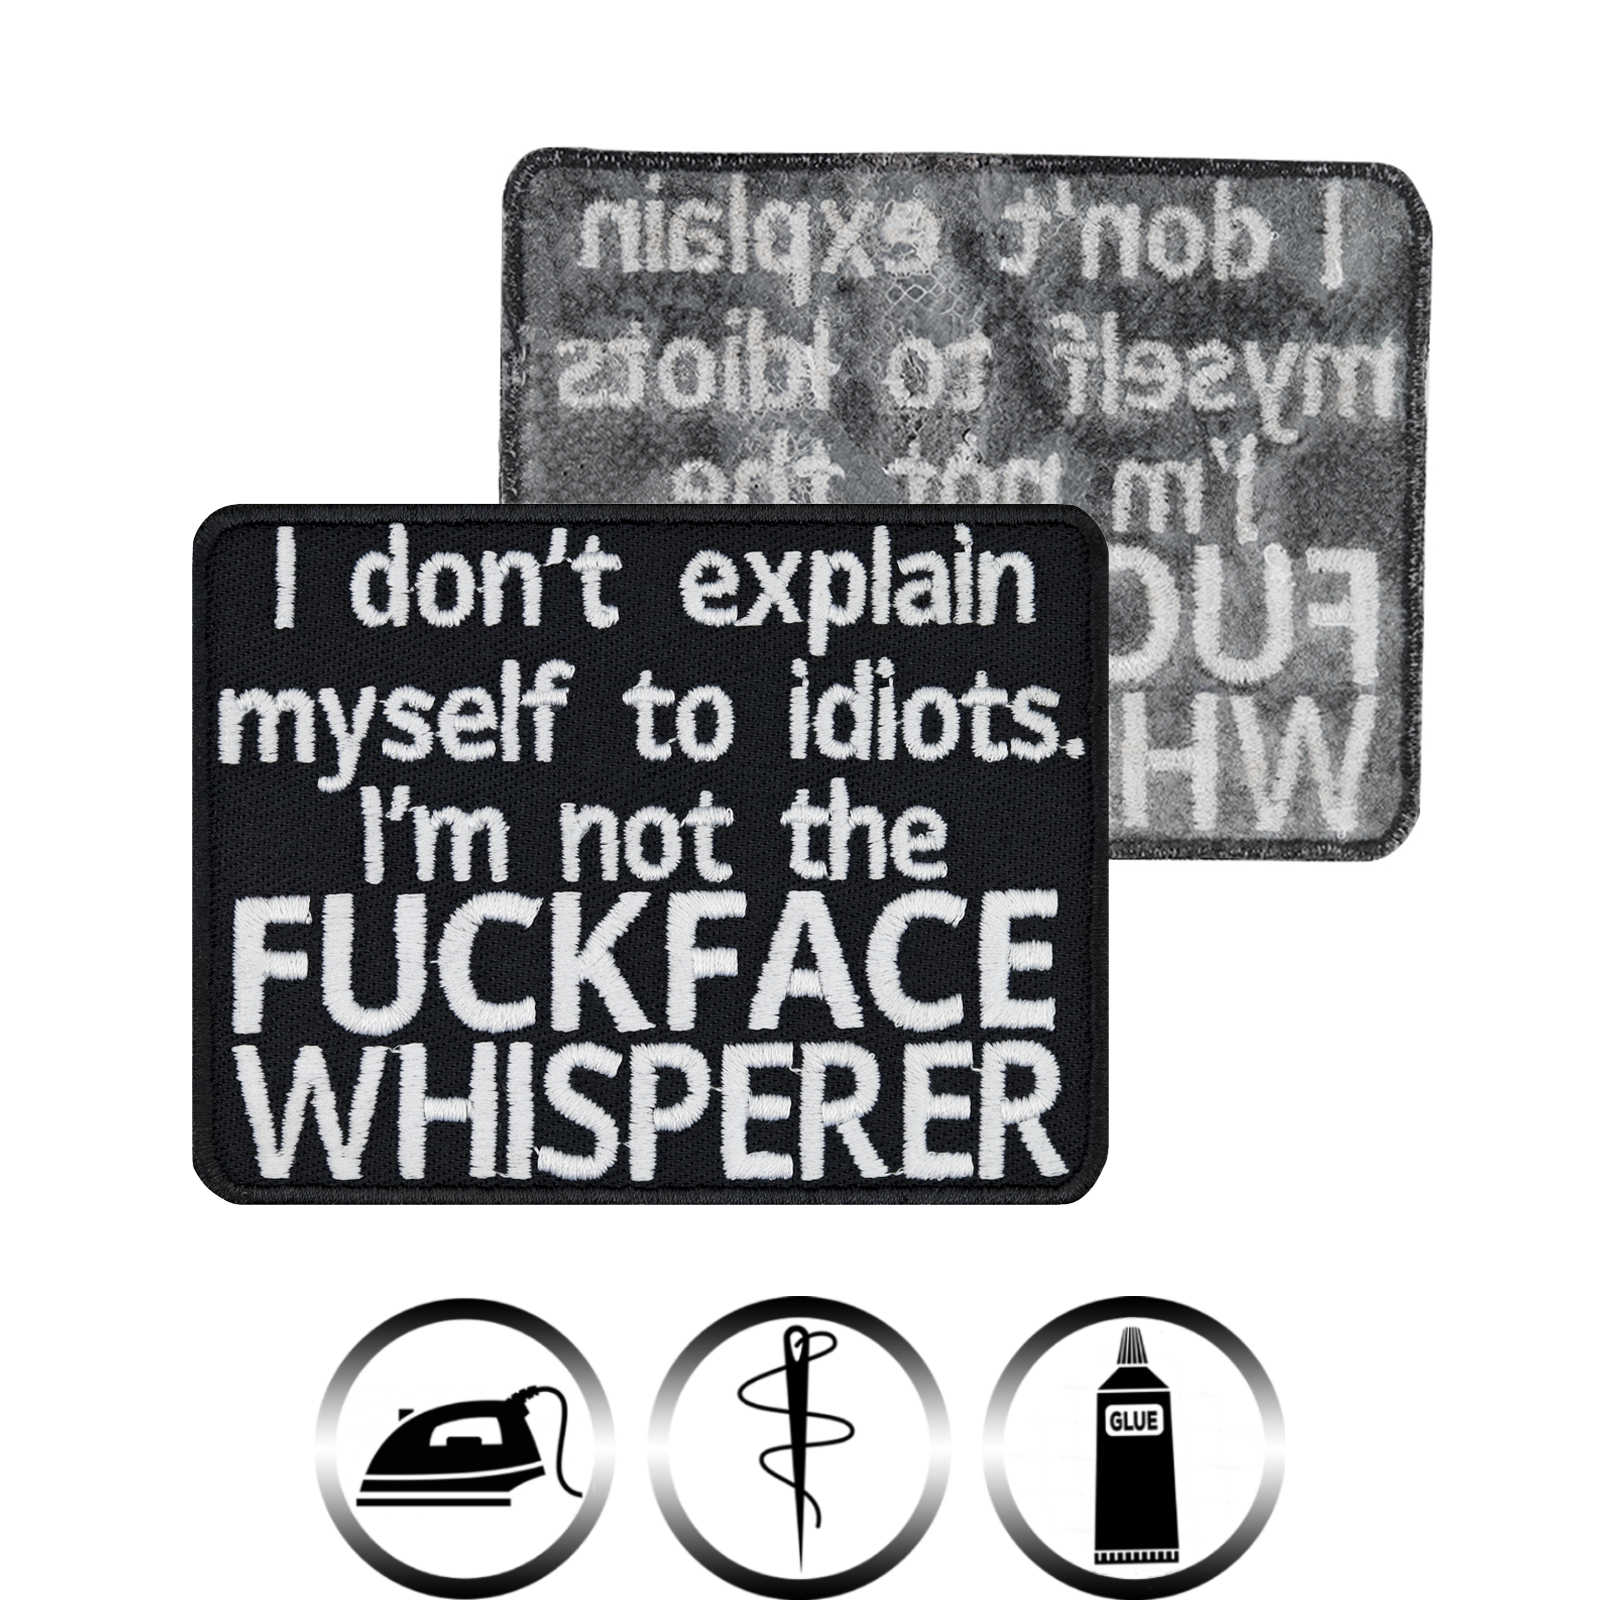 I'm not the fuckface whisperer! - Patch